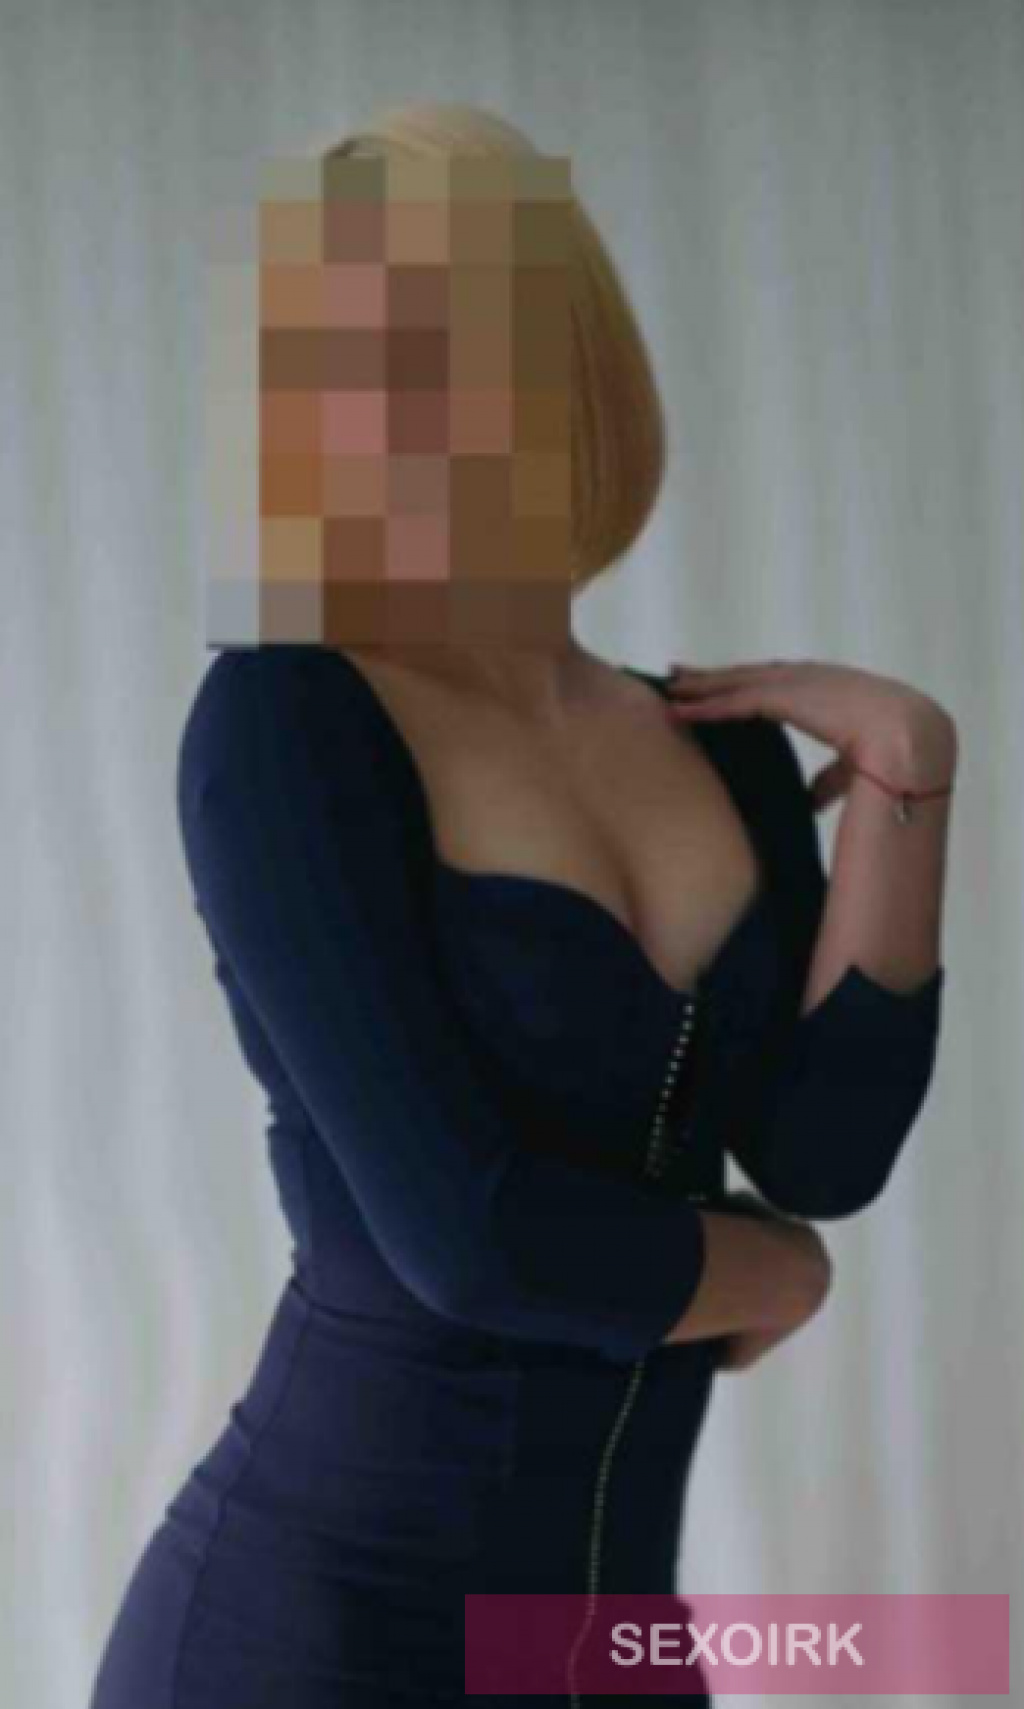 Даша: проститутки индивидуалки в Иркутске